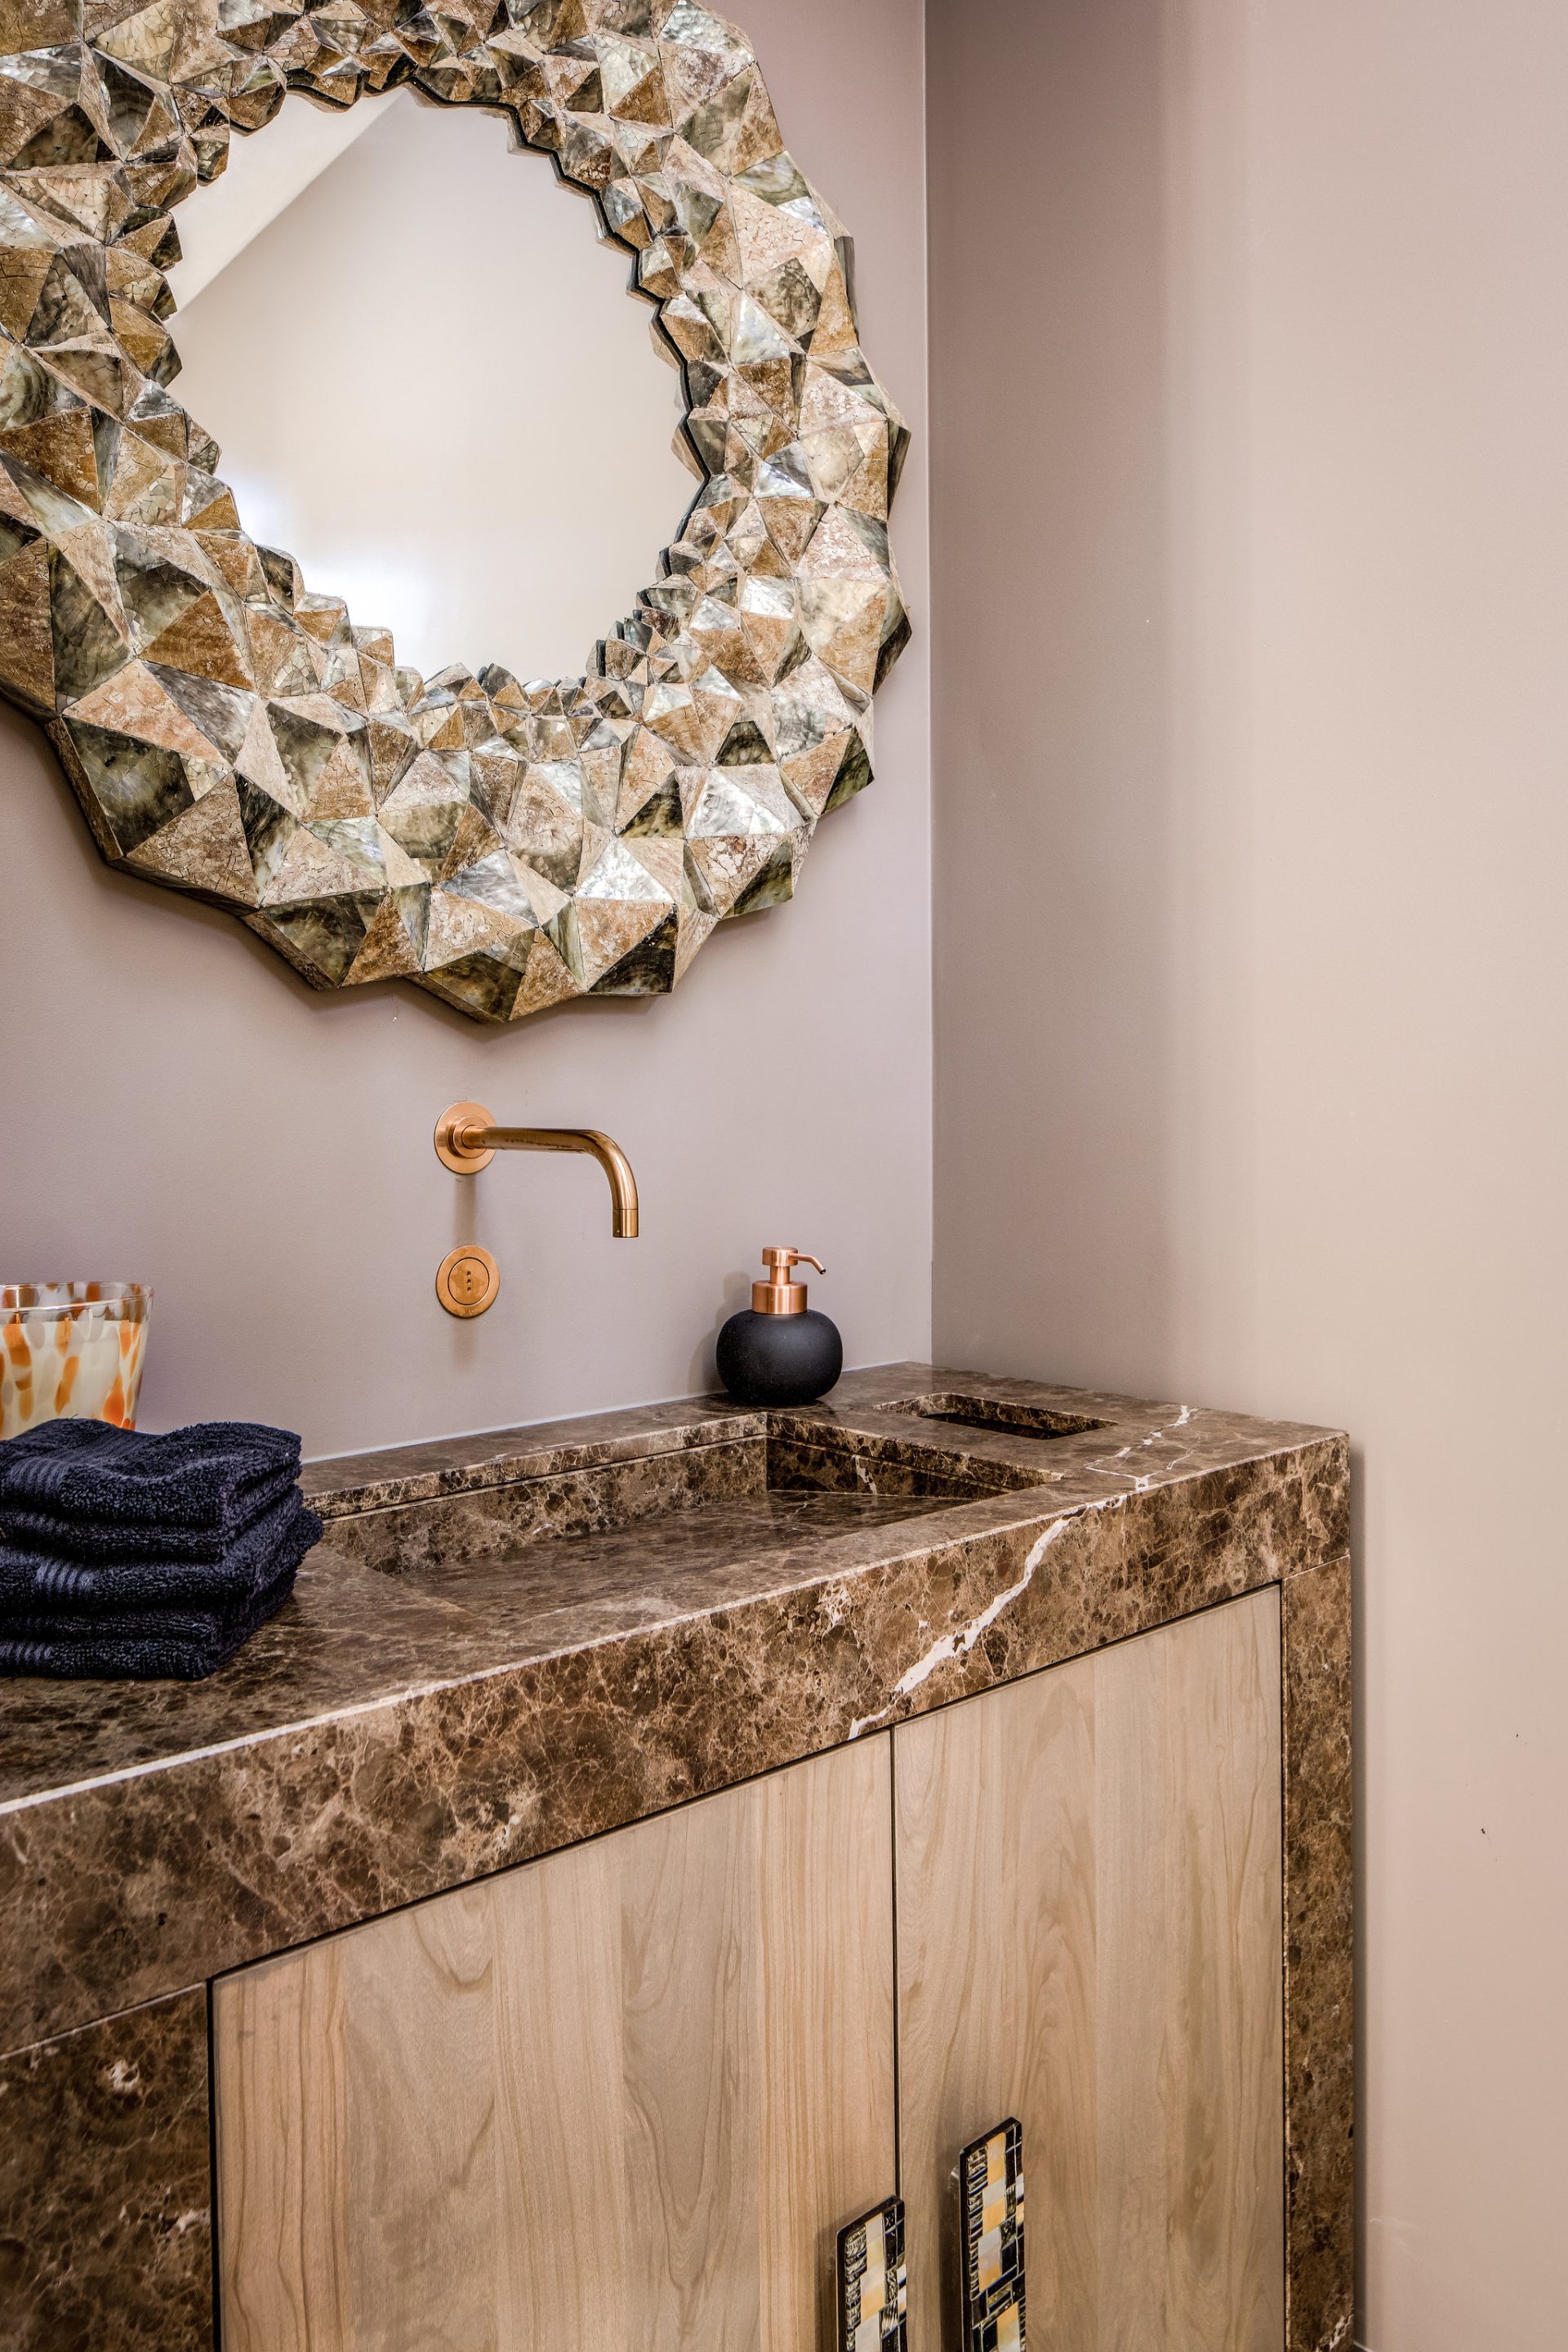 Toilet wastafel met bruin marmer blad, brons sanitair en een unieke spiegel